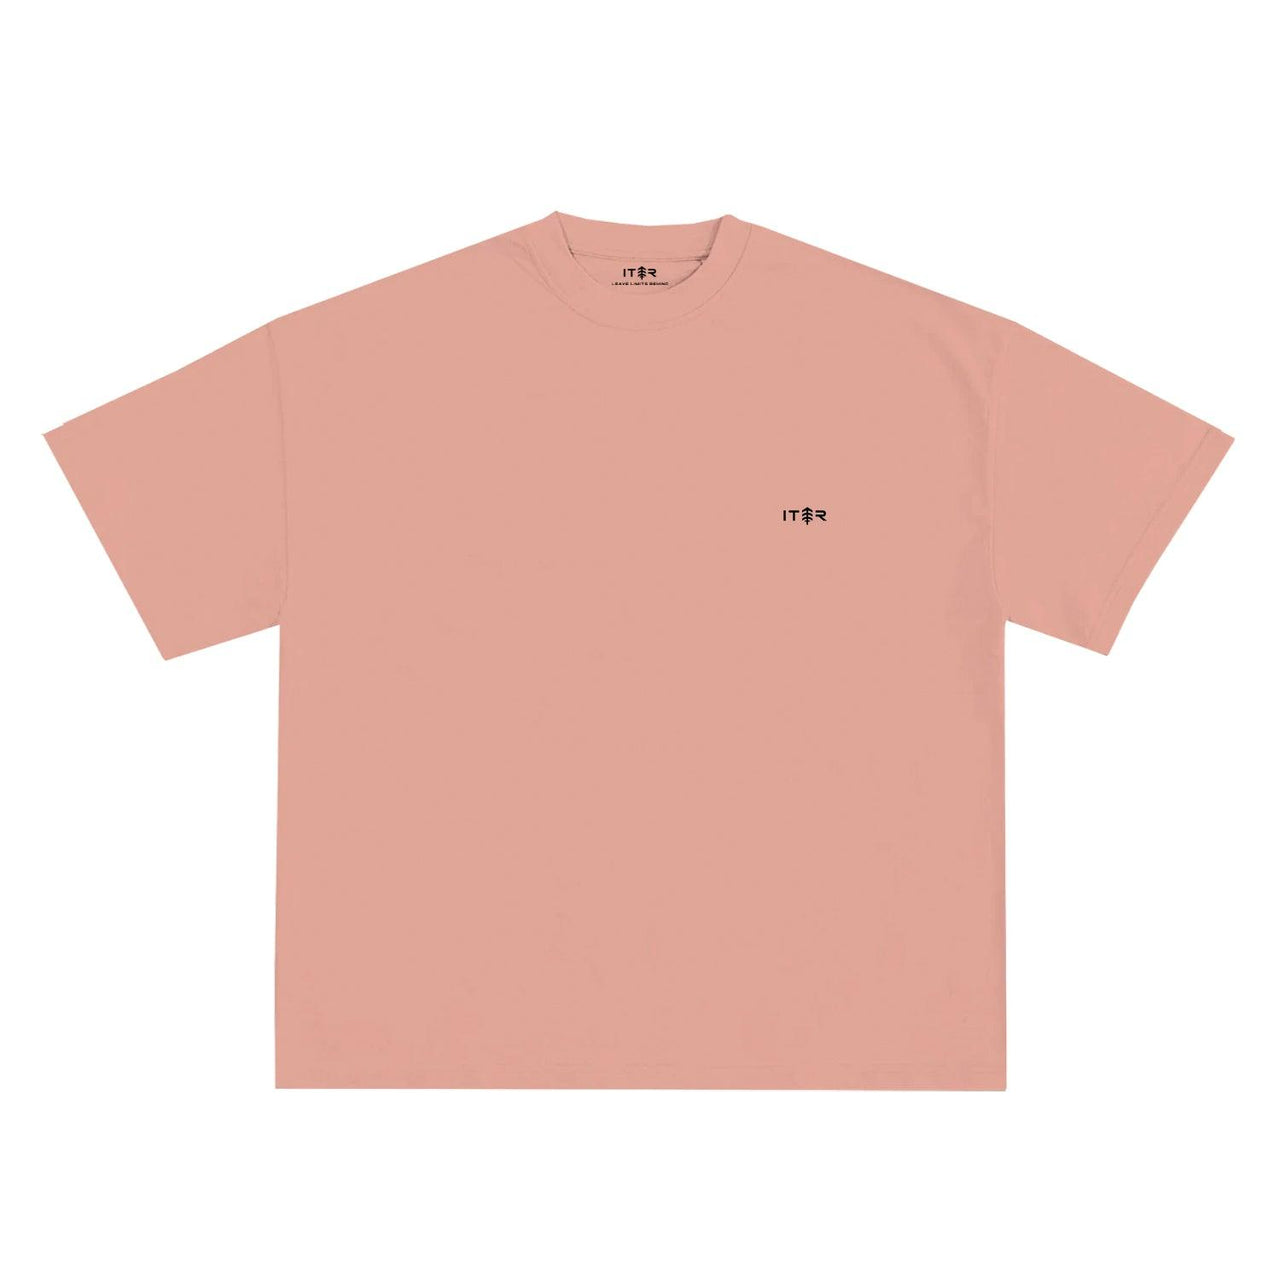 Signature T-Shirt - Dusty Pink - ITR Apparel